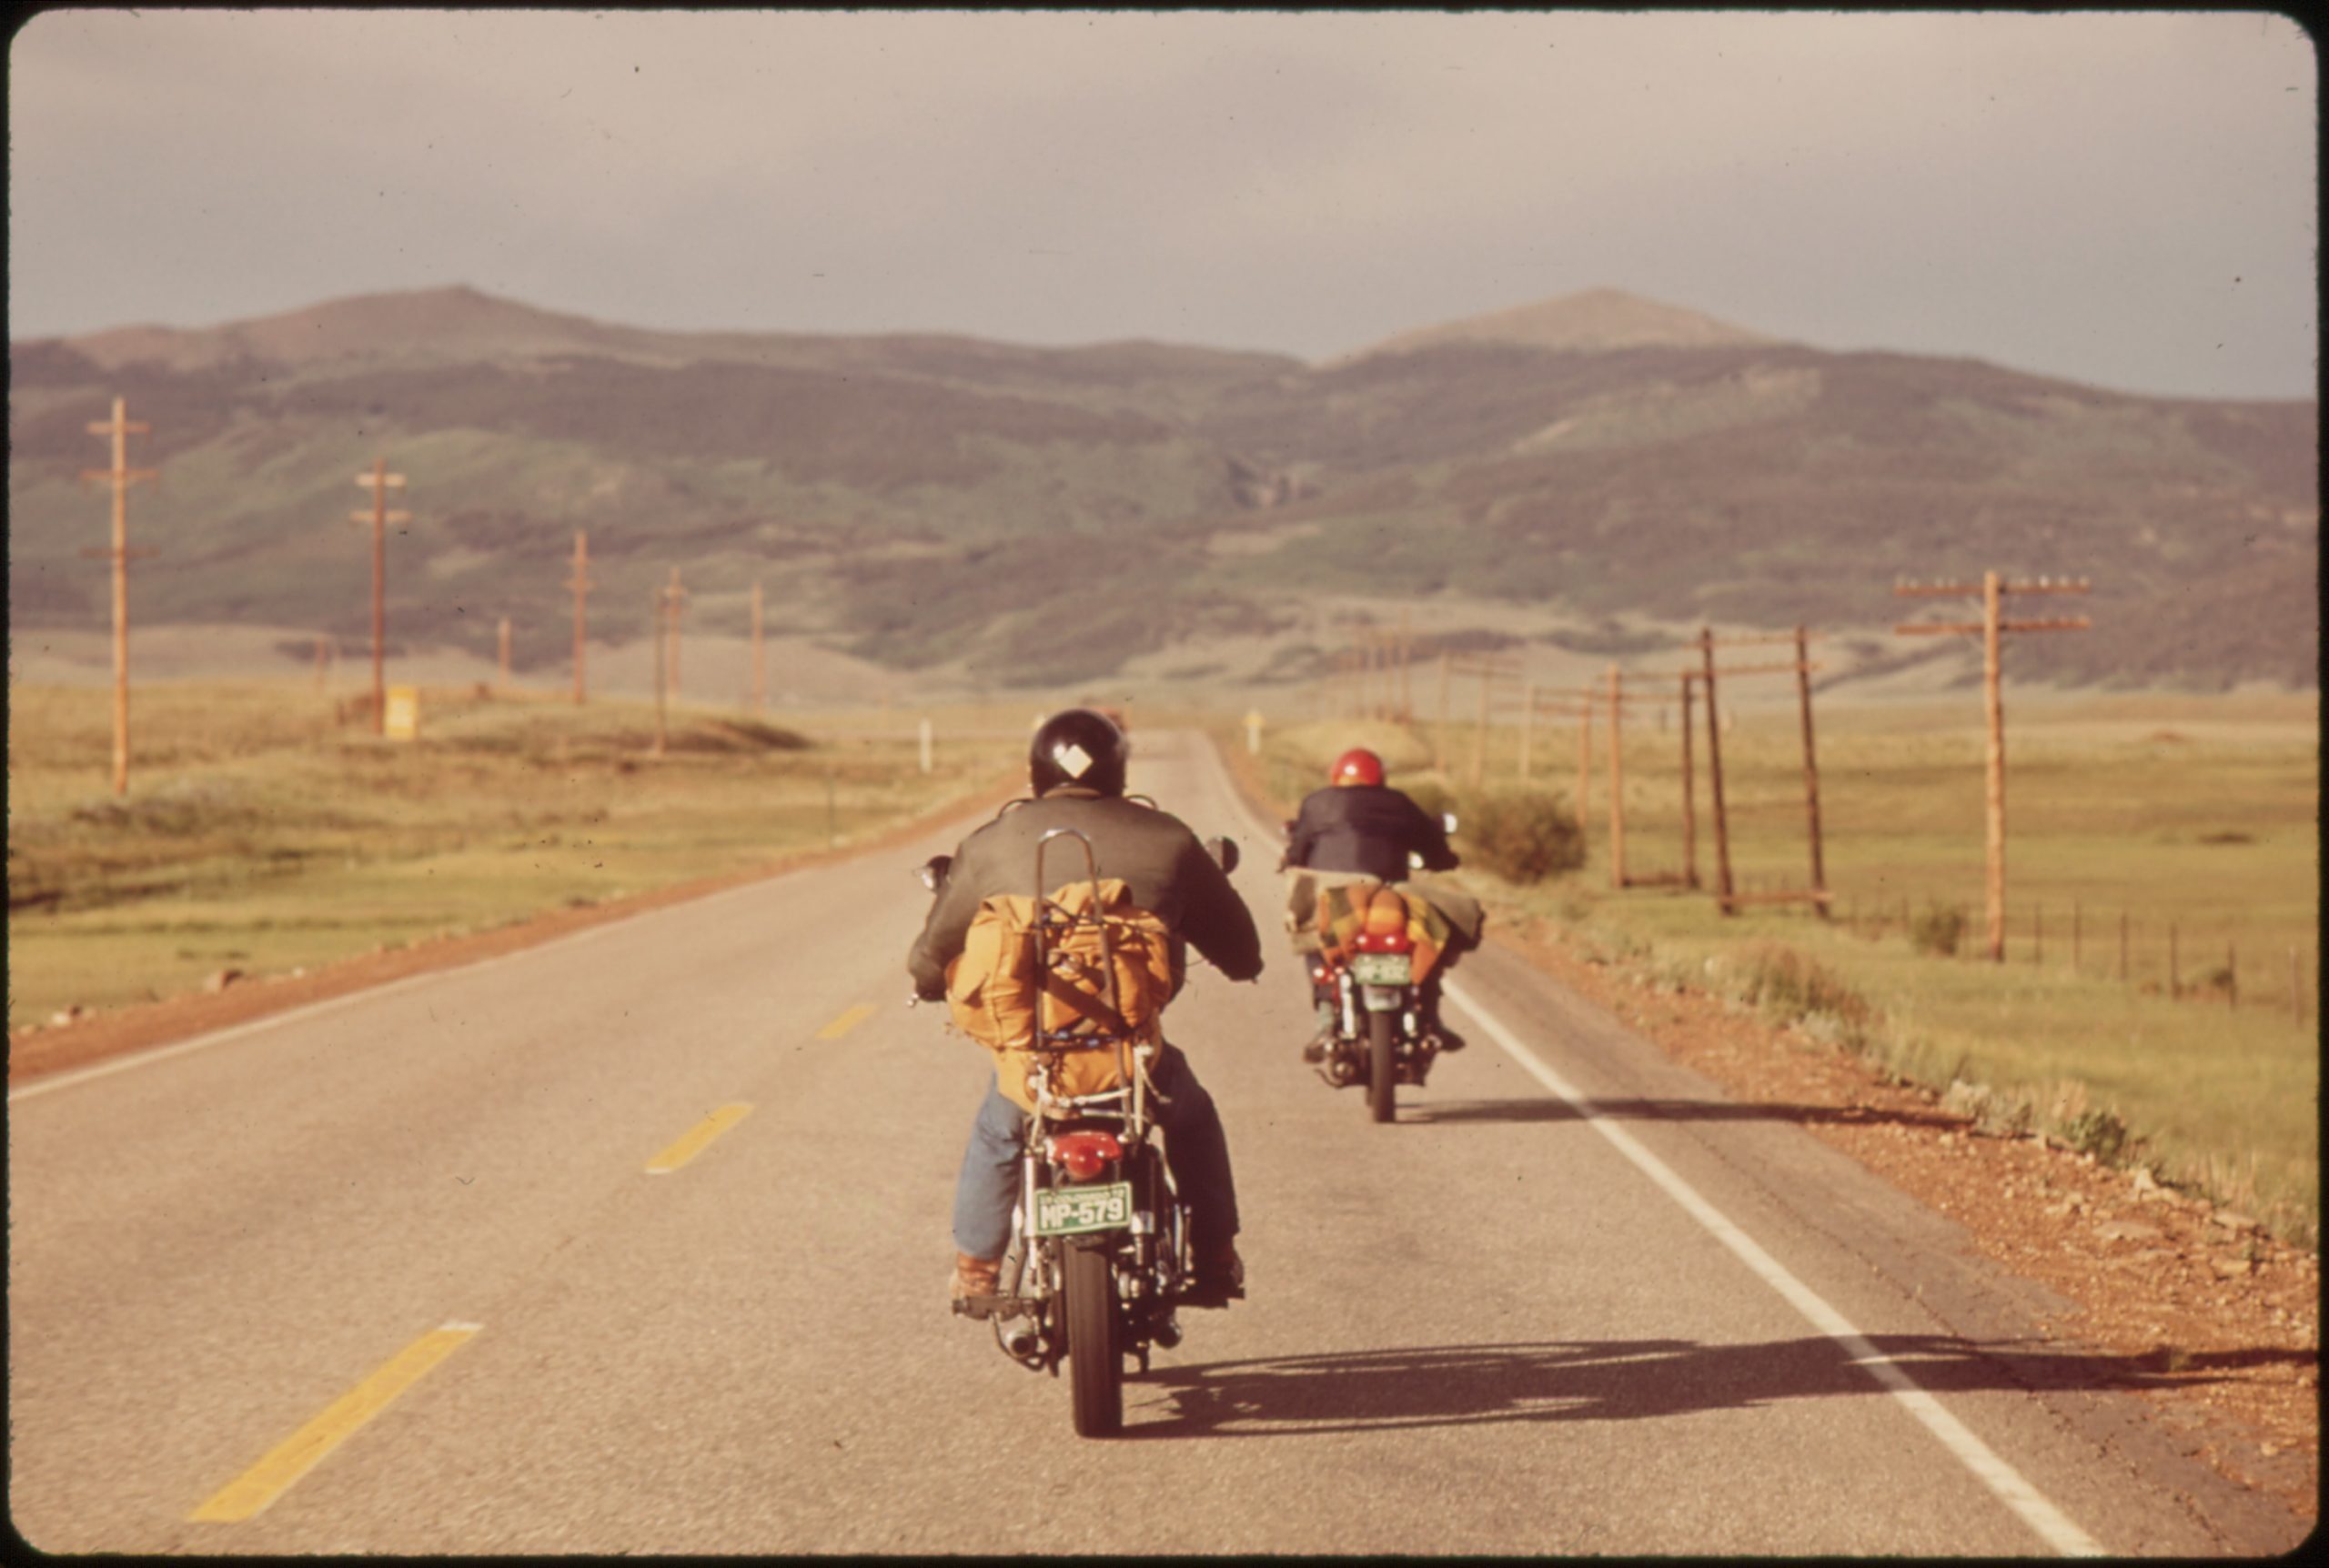 two men ride motorcycles